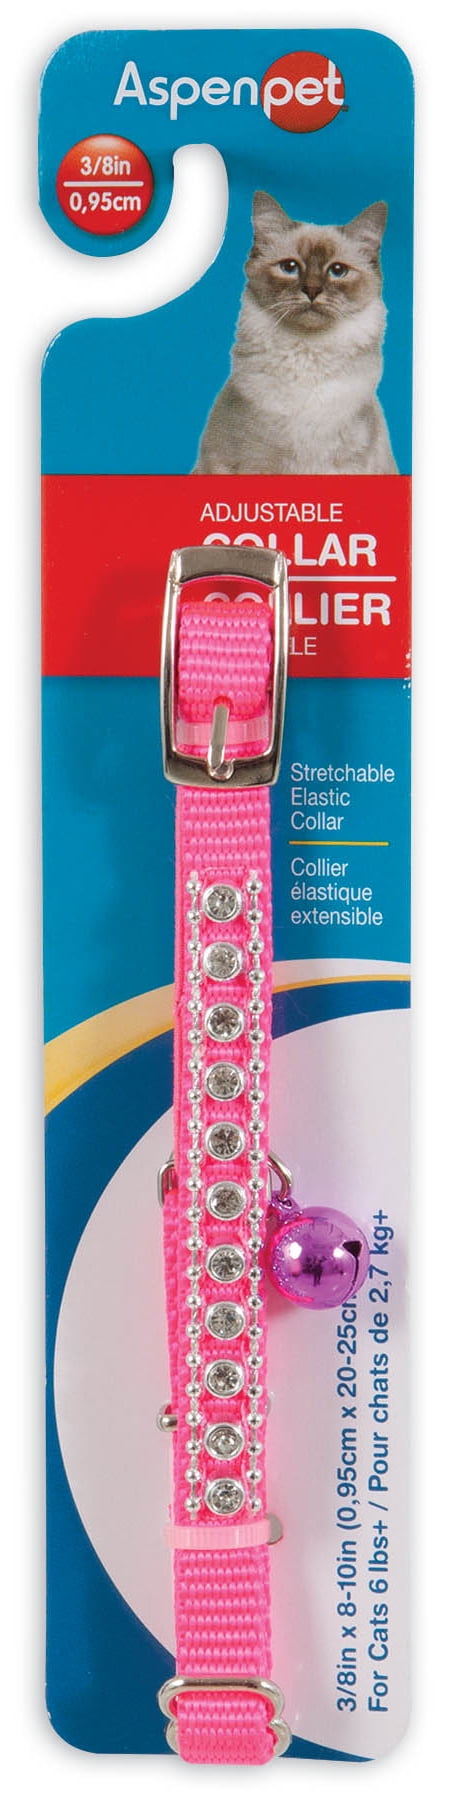 pink rhinestone cat collar